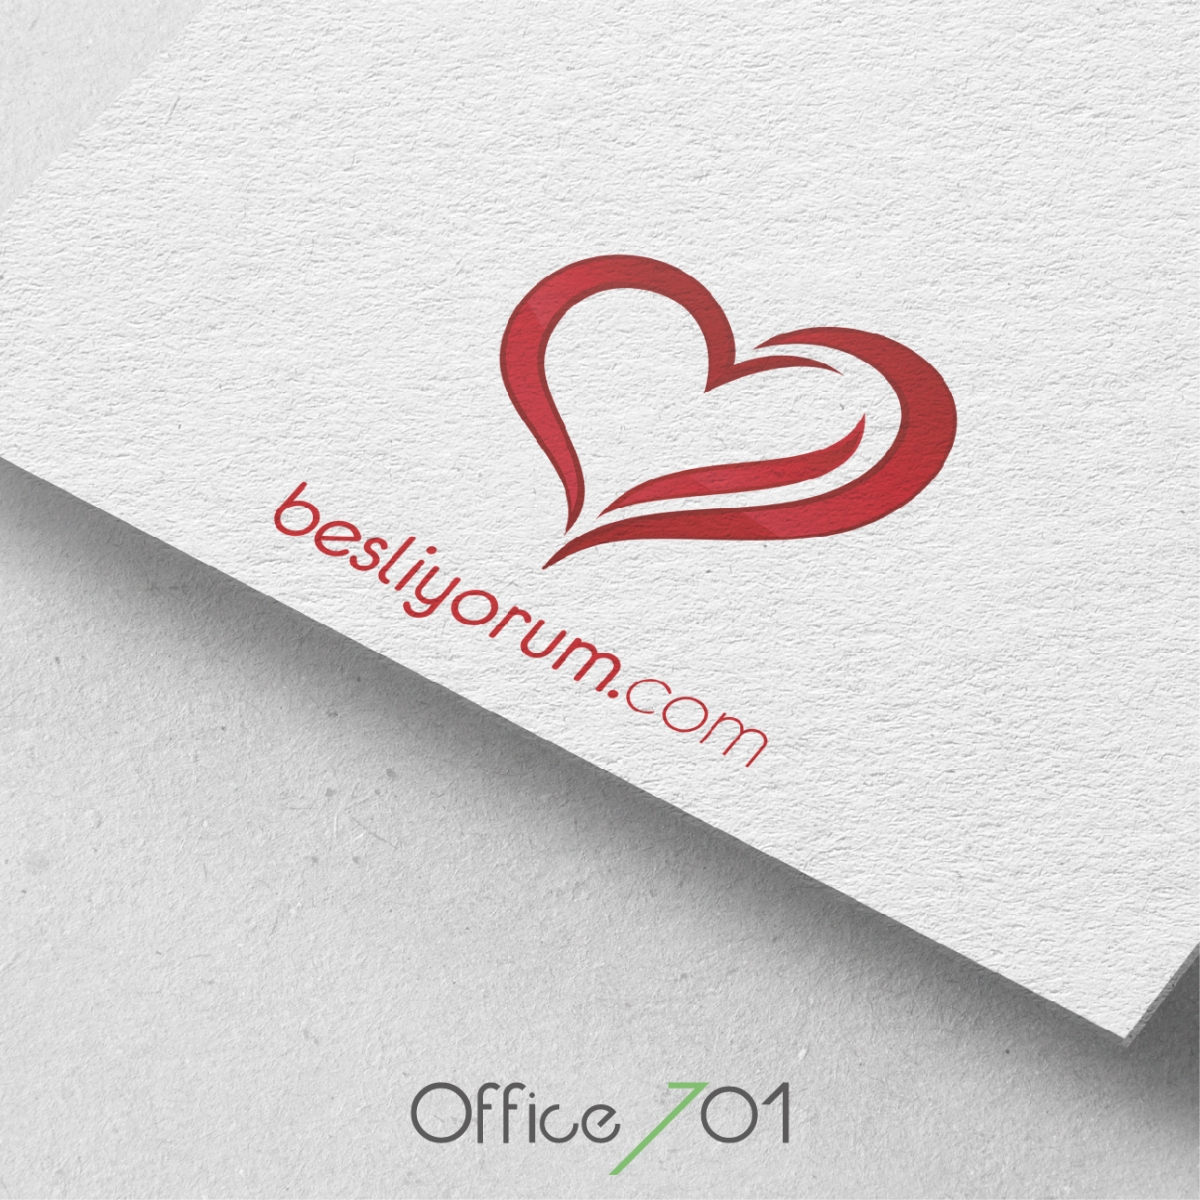 Office701 | Besliyorum | Pet Products Marketplace Logo Design V1